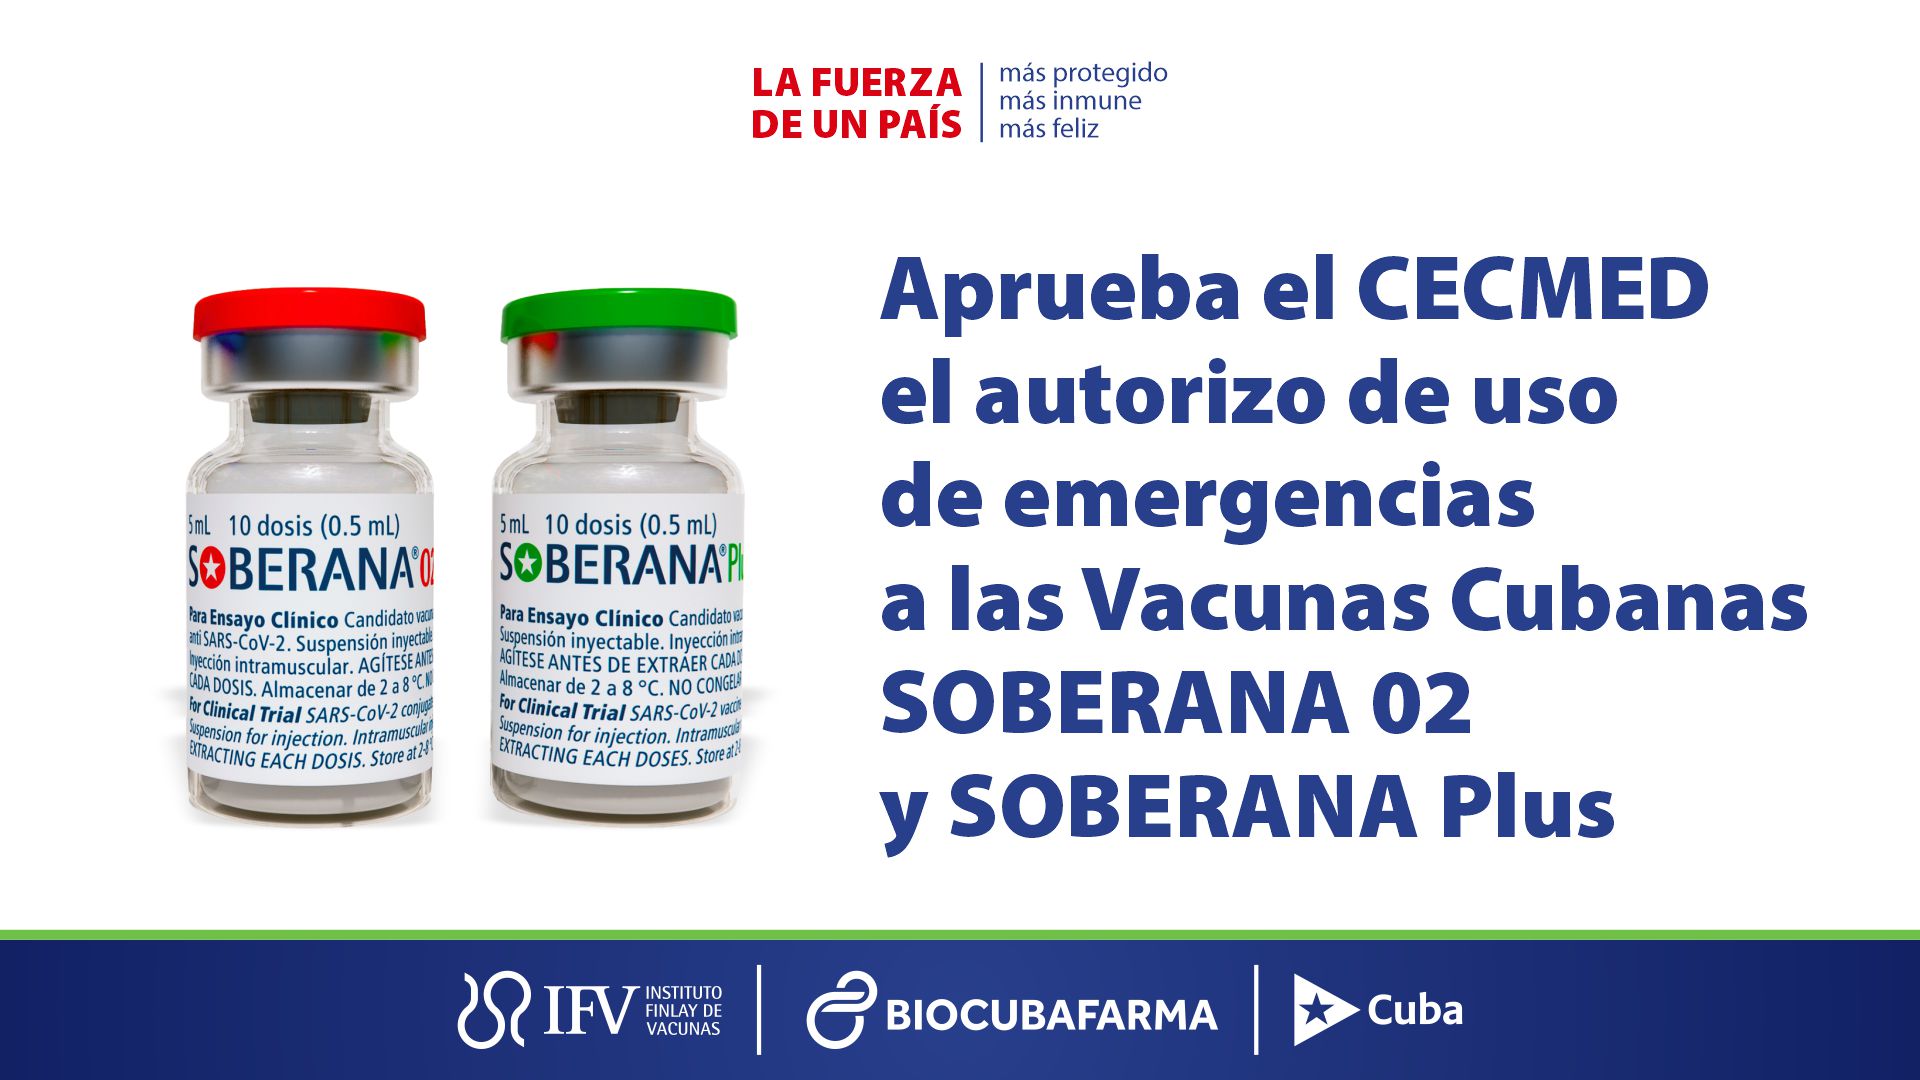 Soberana02yPlus (Foto BioCubaFarma)